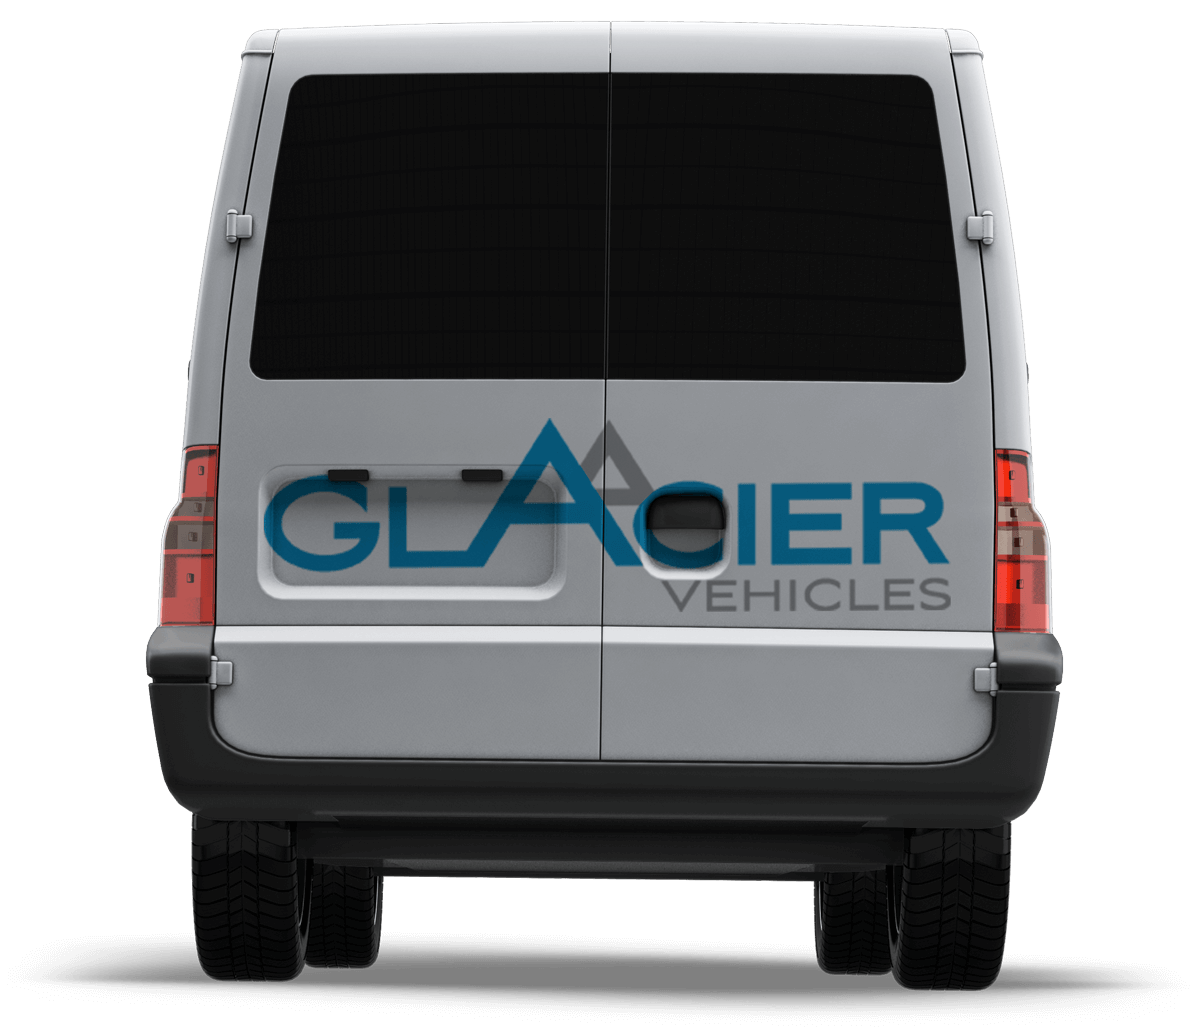 Glacier vehicle